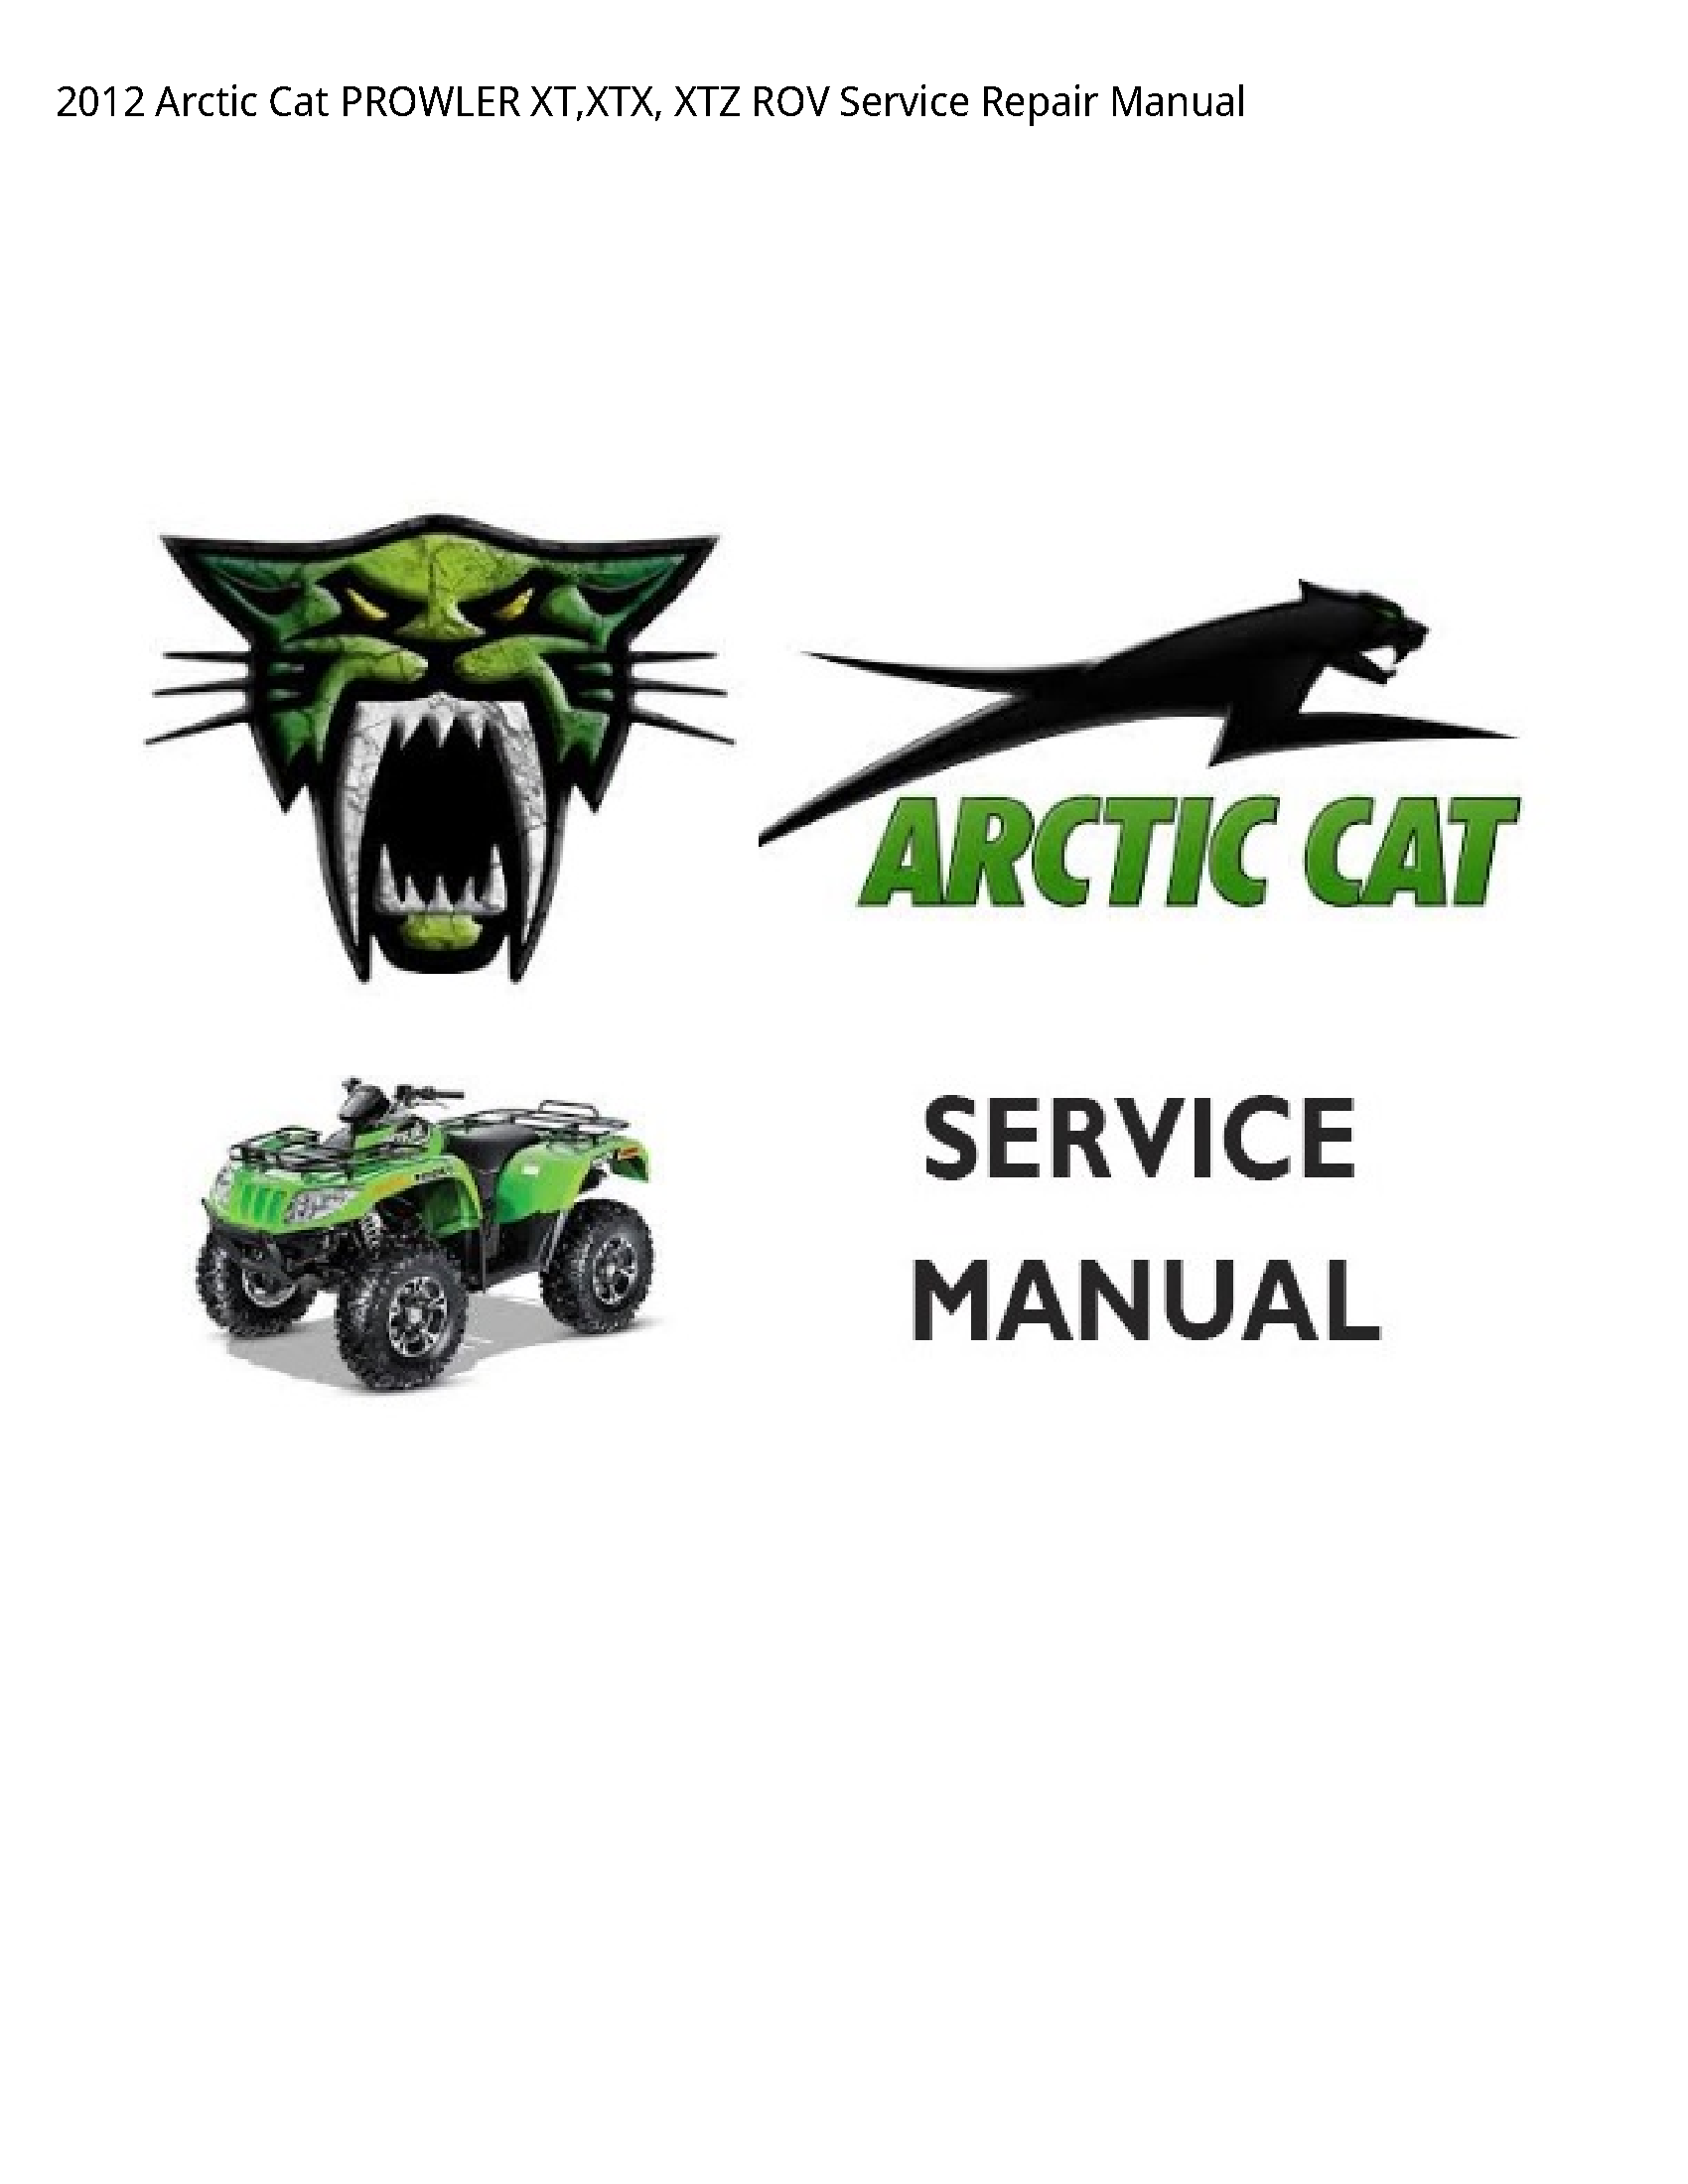 Arctic Cat PROWLER XT manual